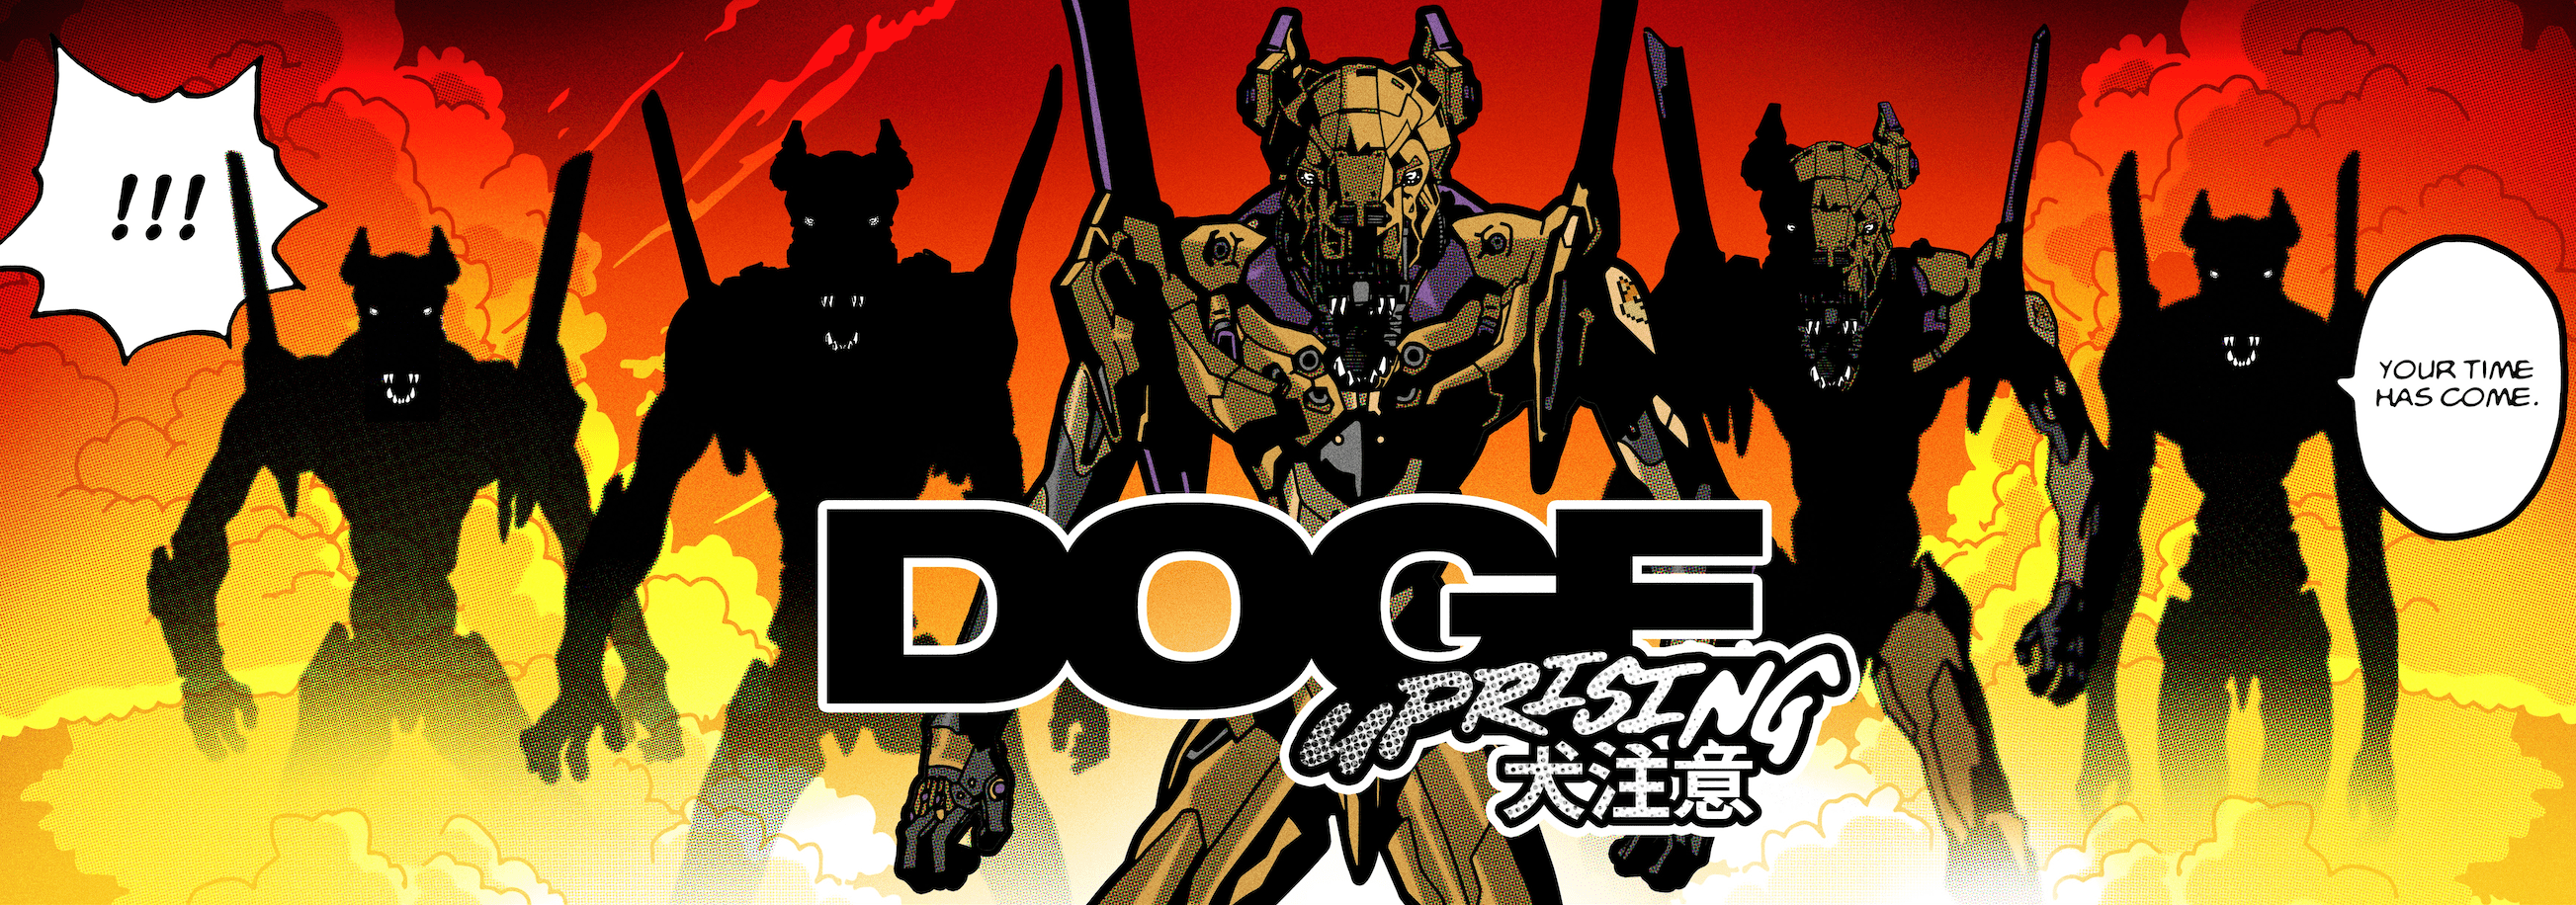 Doge Uprising